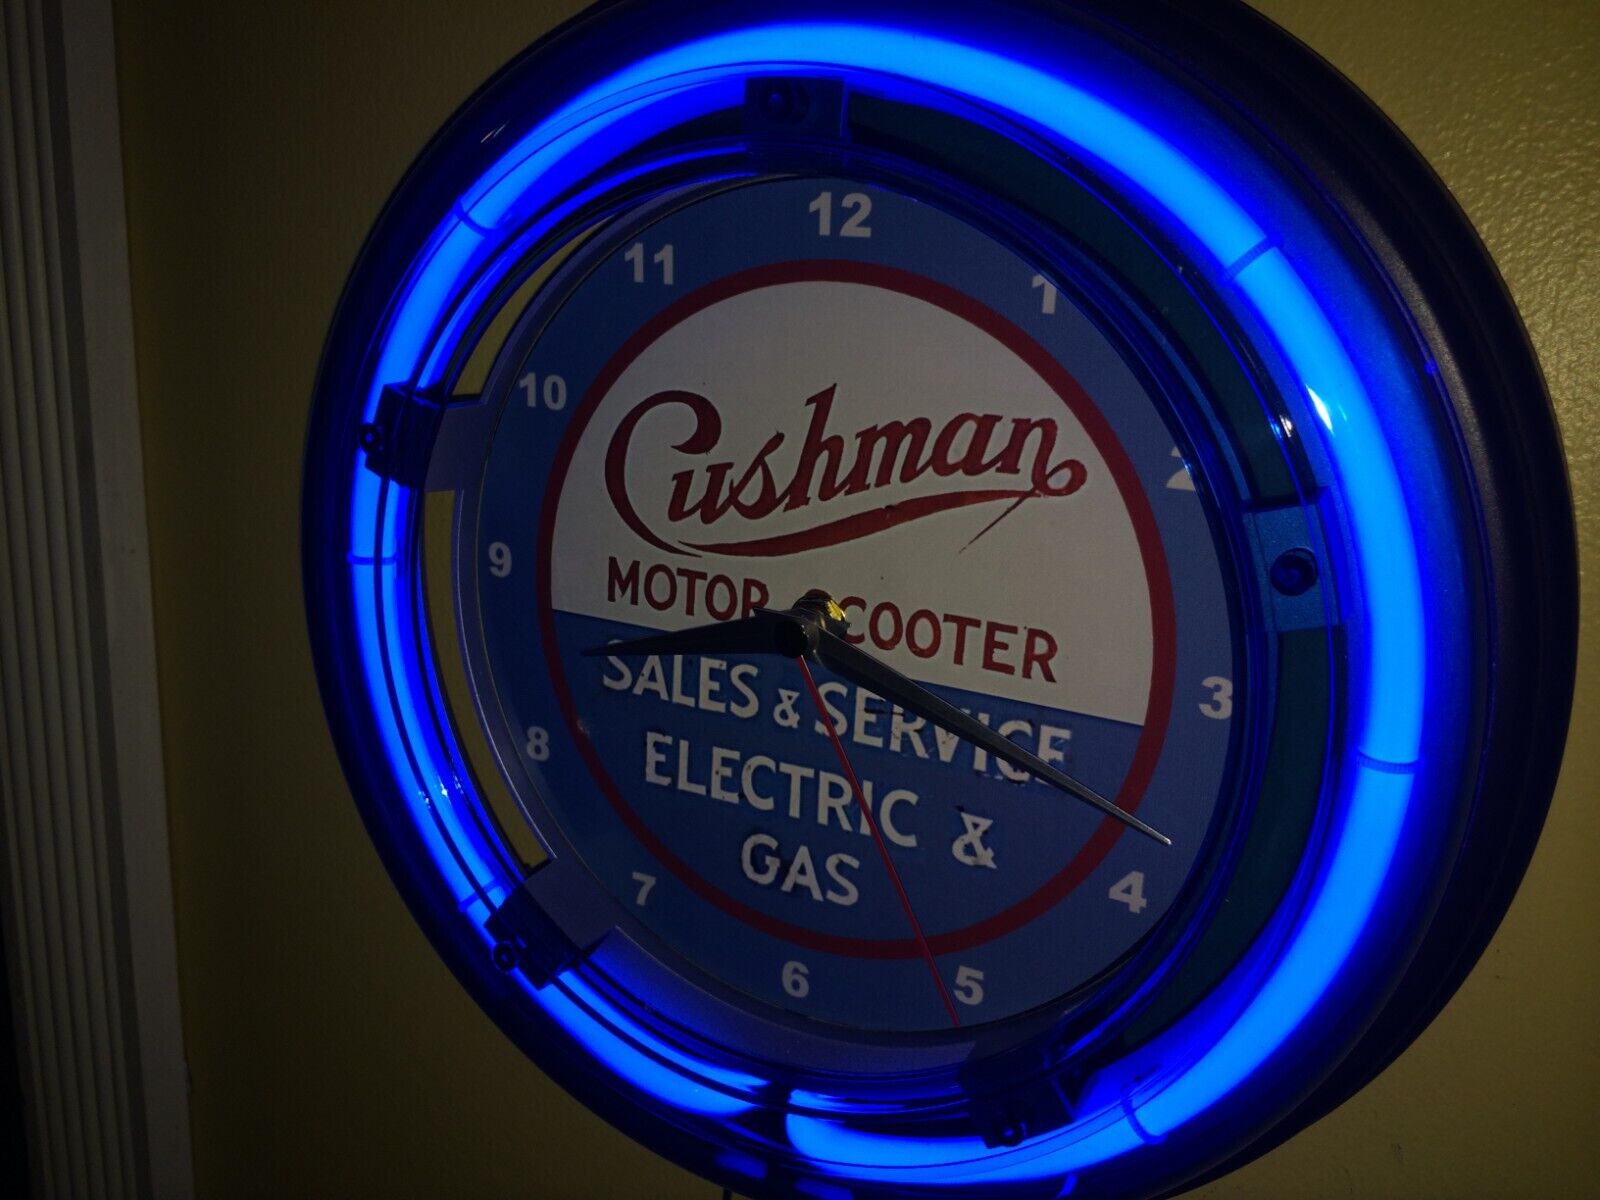 Cushman Motor Scooter Motorcycle Moped Garage Neon Wall Clock Advertising Sign